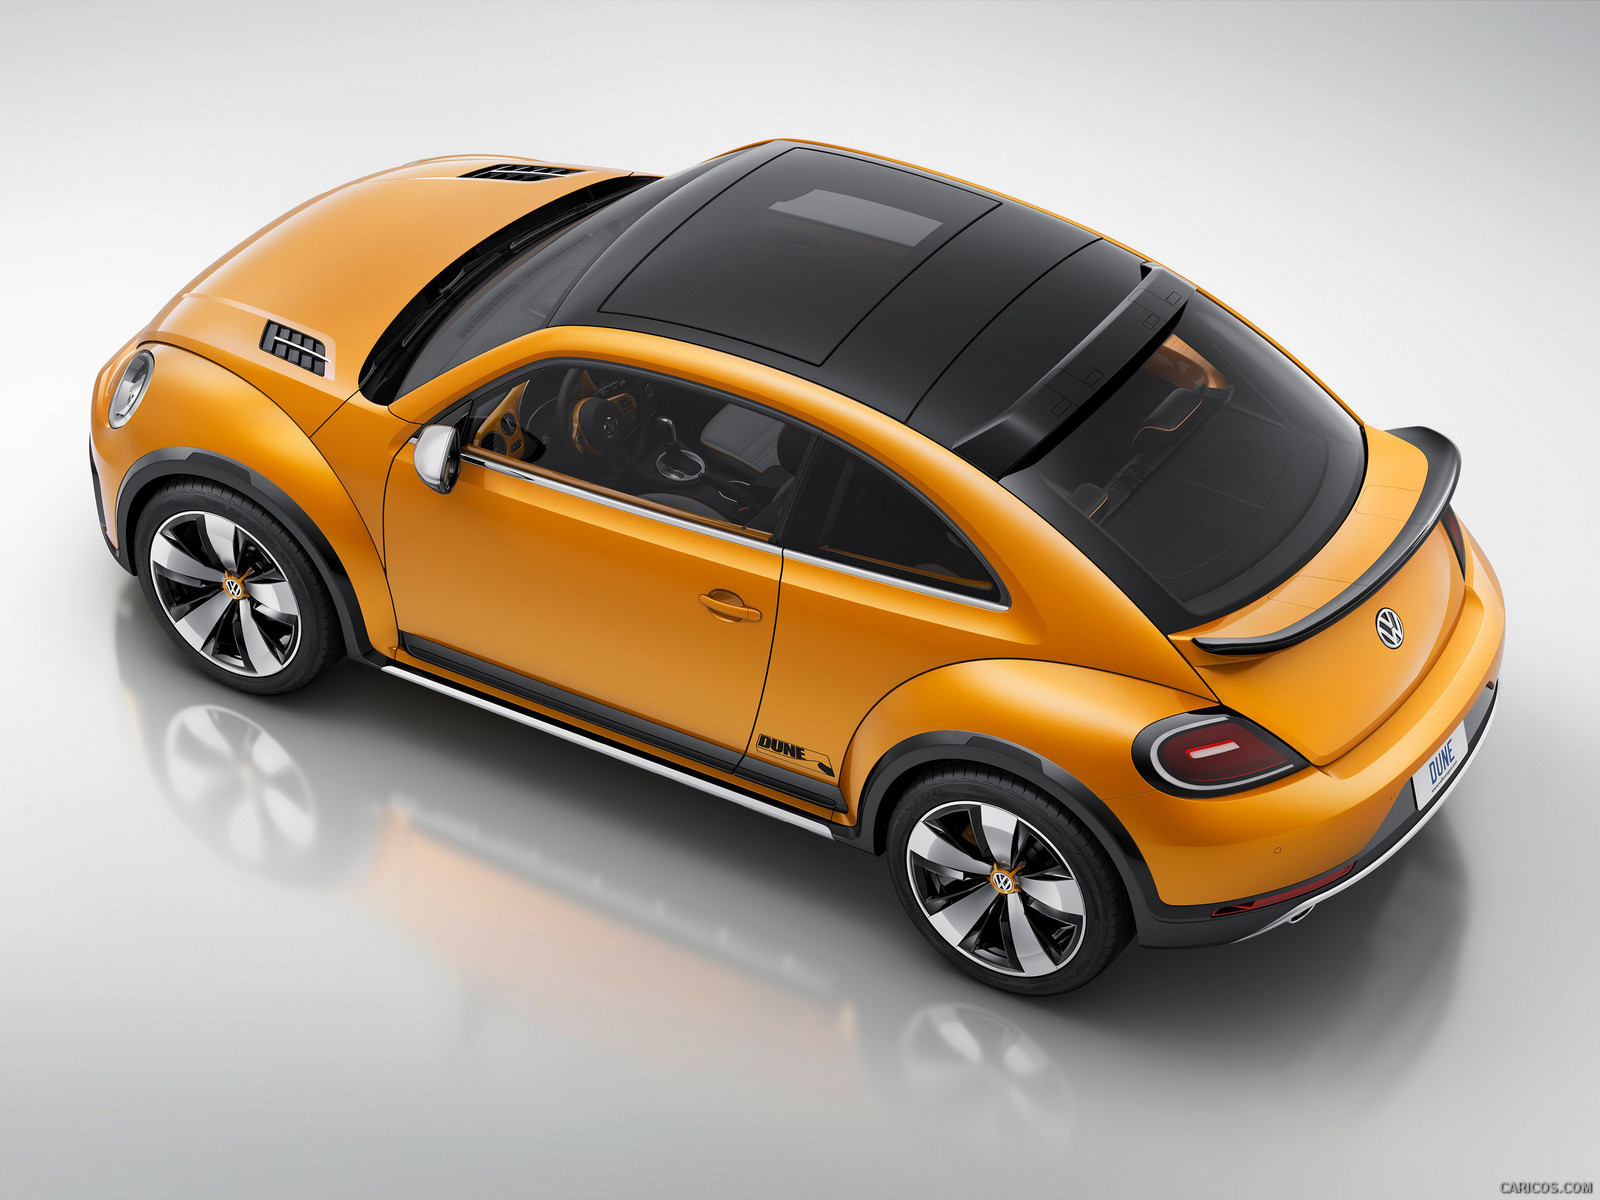 2014 Volkswagen Beetle Dune Concept Backgrounds, Compatible - PC, Mobile, Gadgets| 1600x1200 px